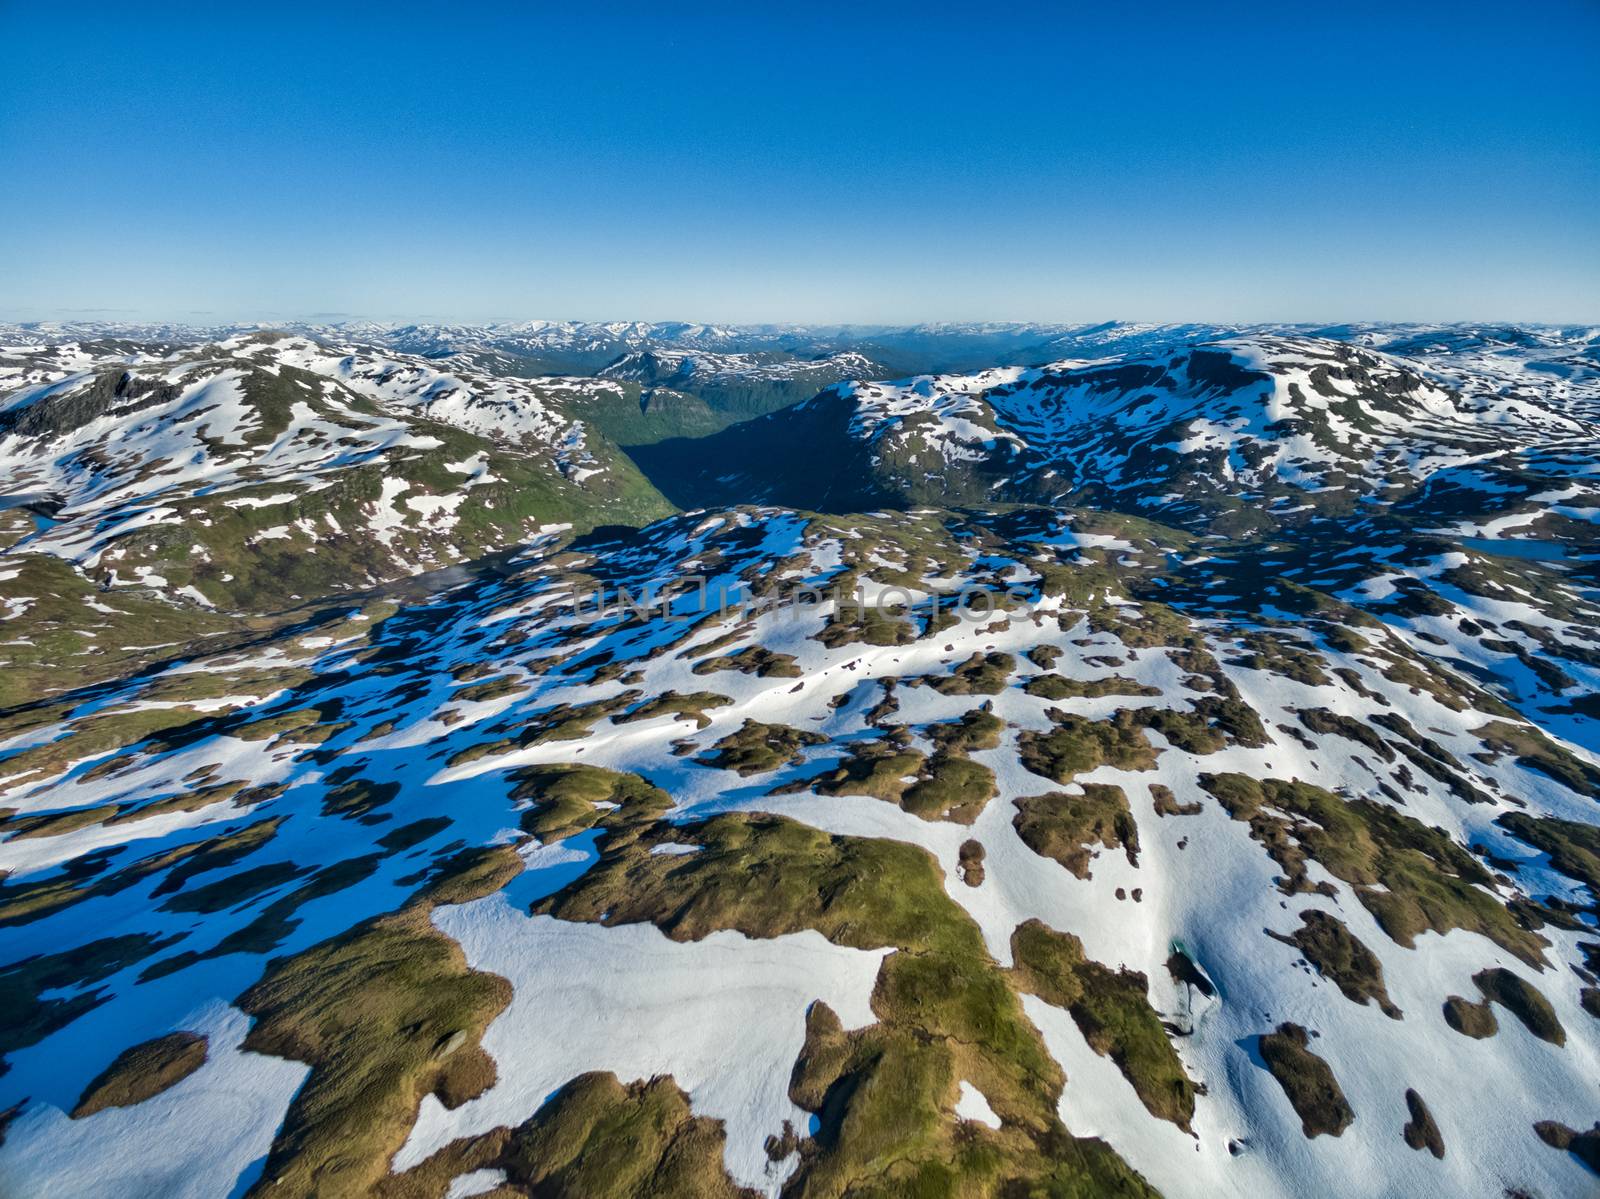 Norwegian mountains by Harvepino